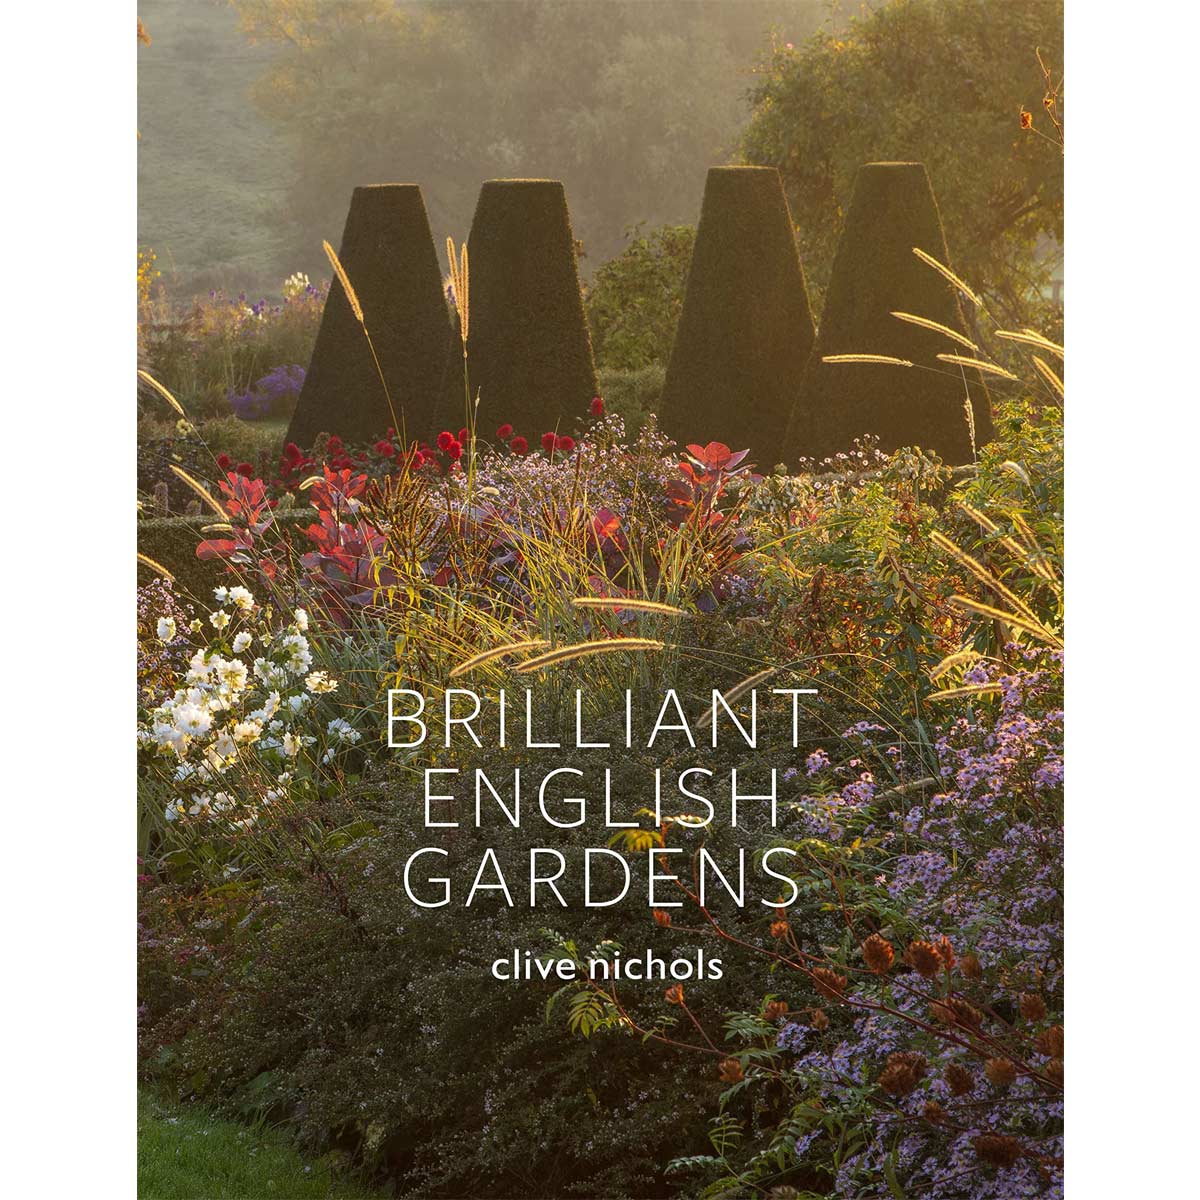 Brilliant English Gardens by Clive Nichols